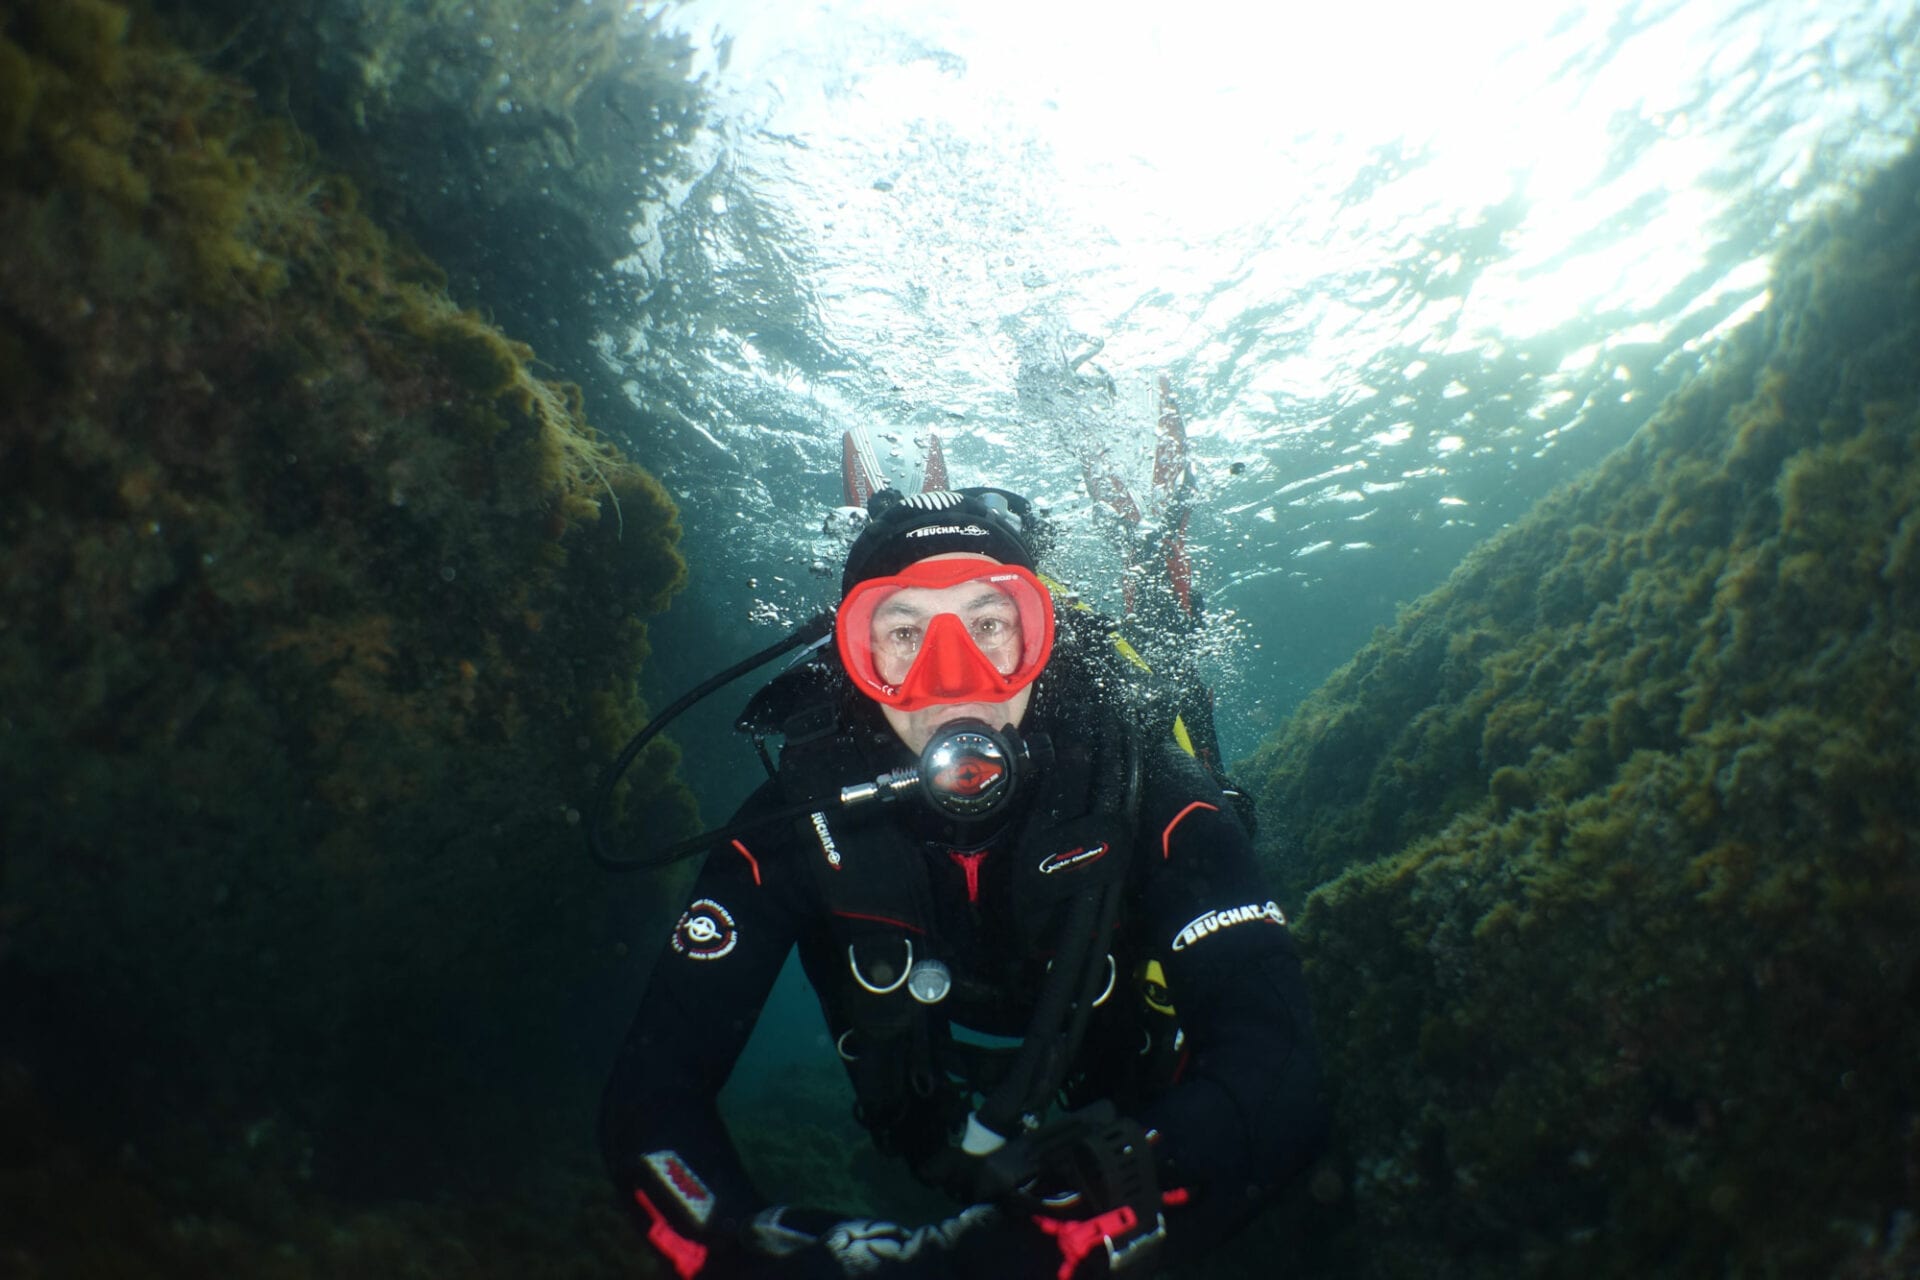 A scuba diver wearing water equipment